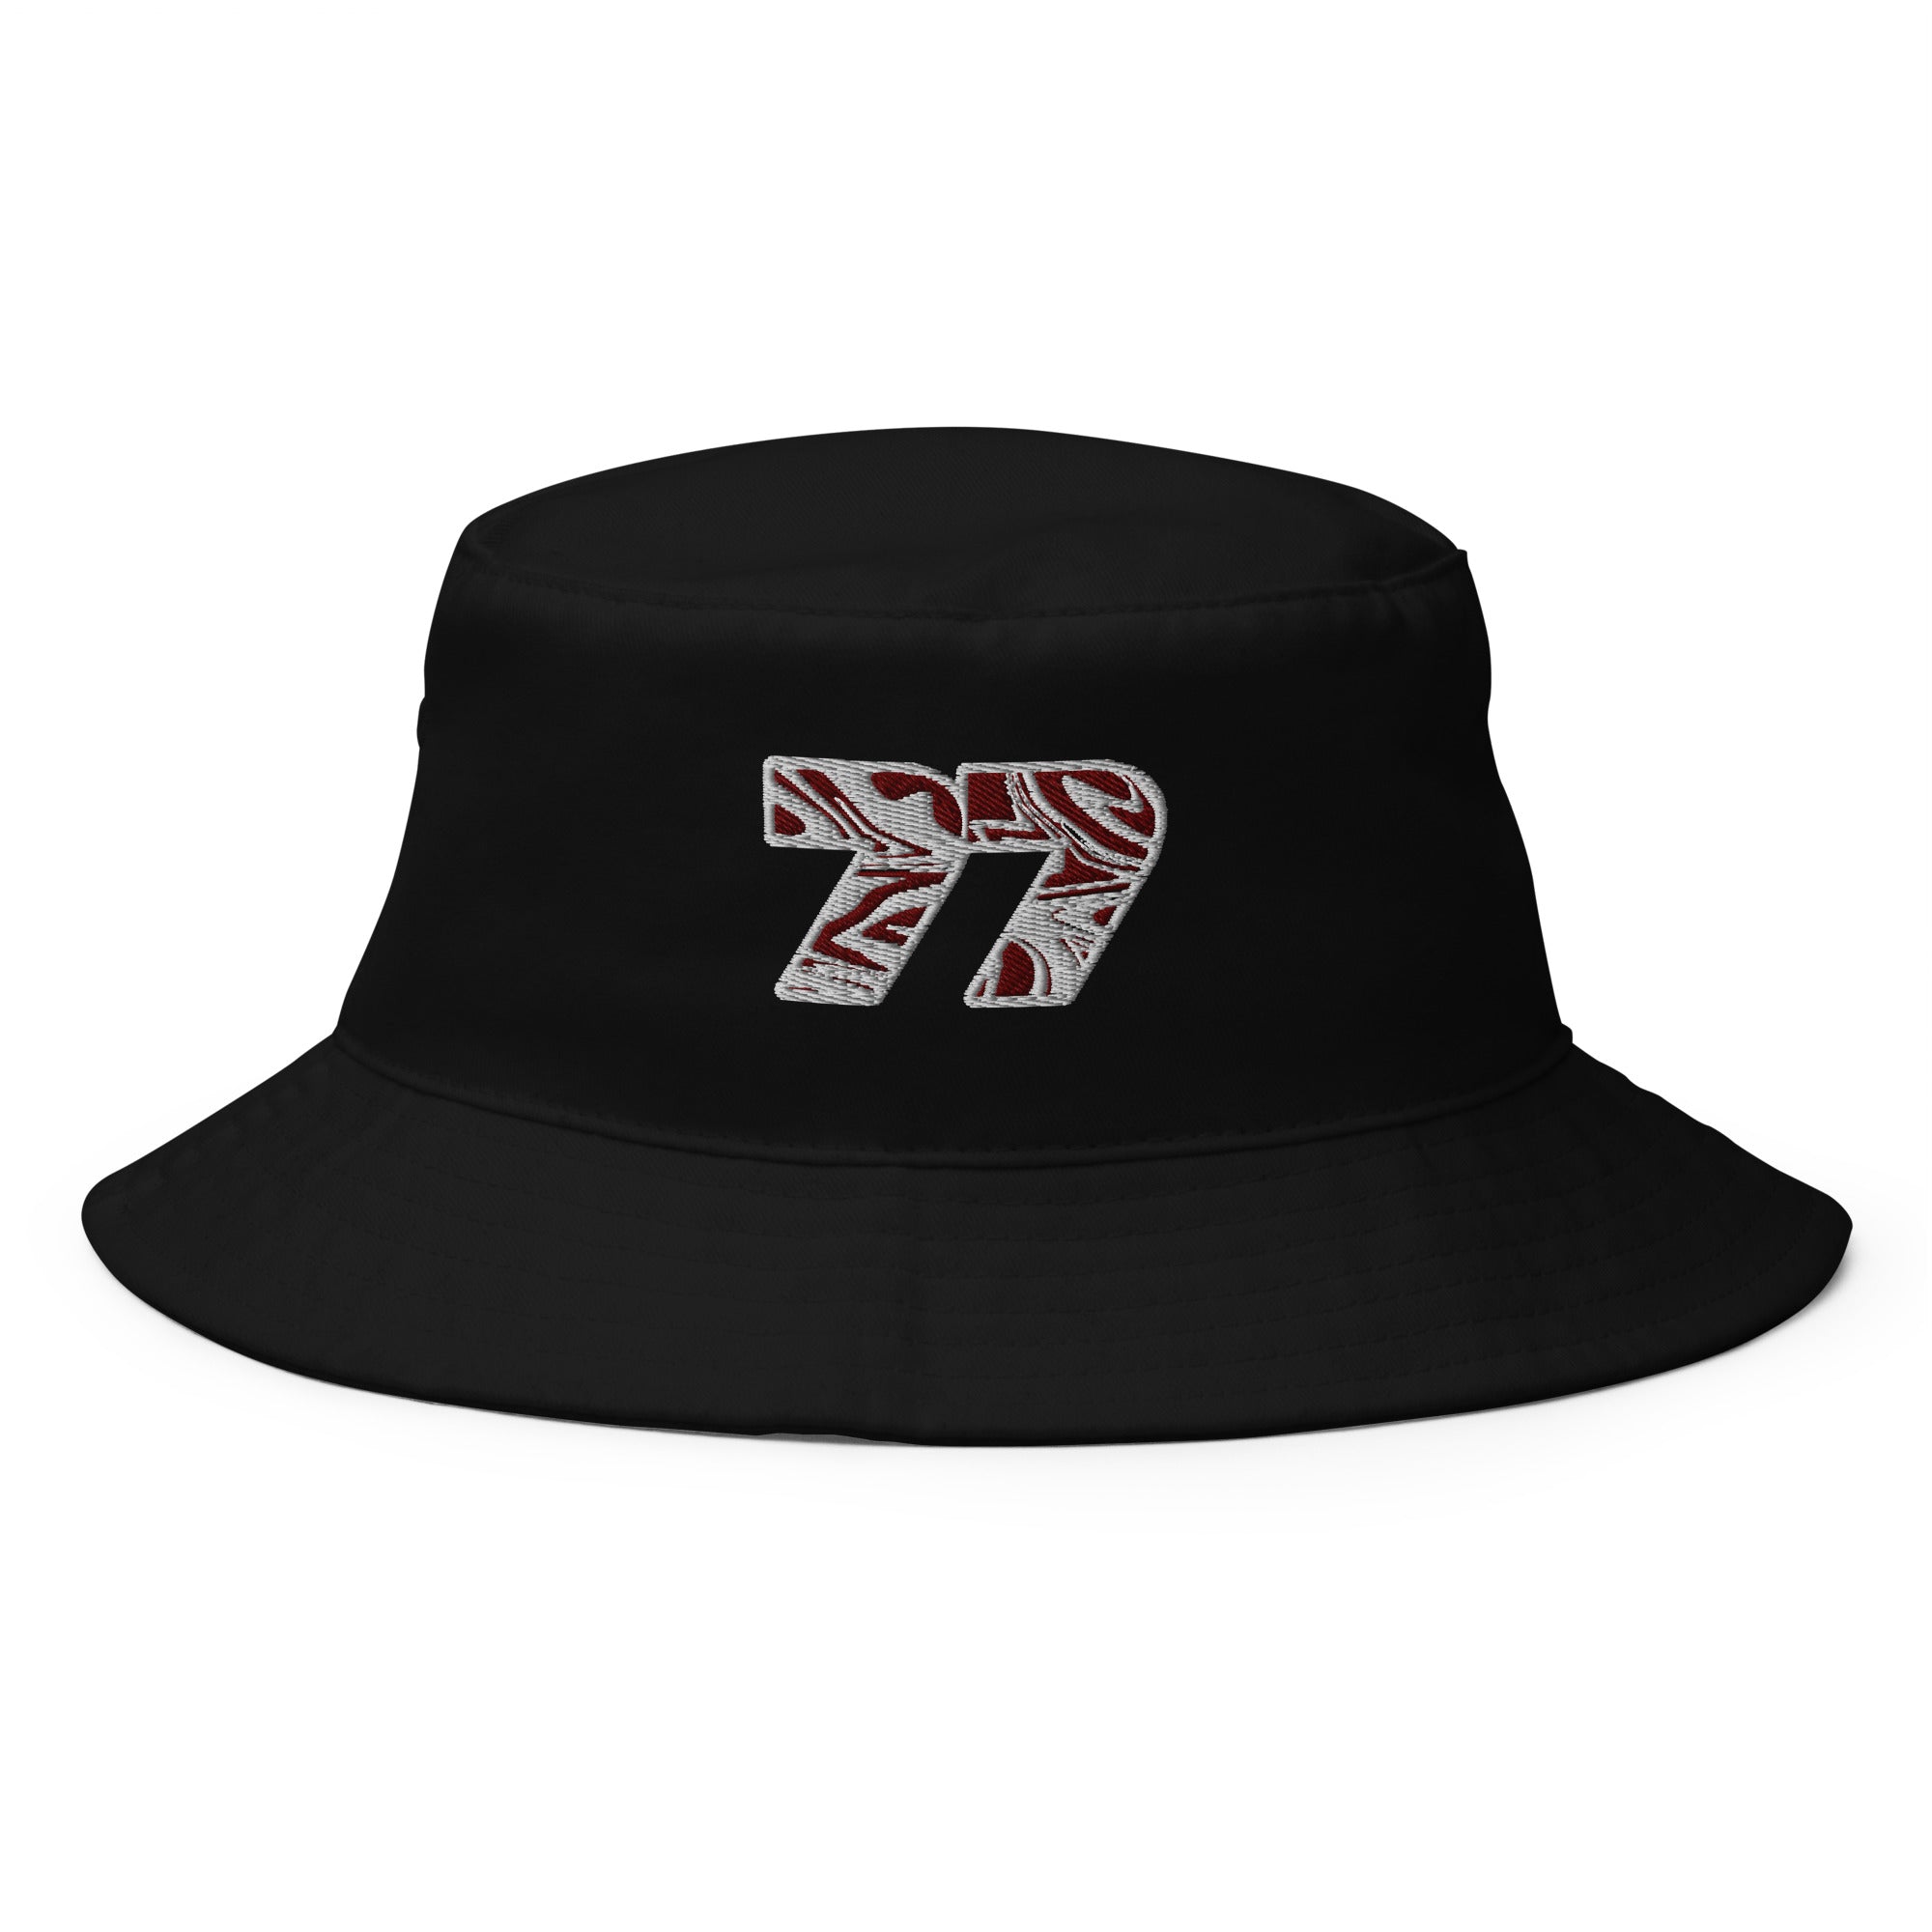 Livery Inspired "77" Bucket Hat - FormulaFanatics